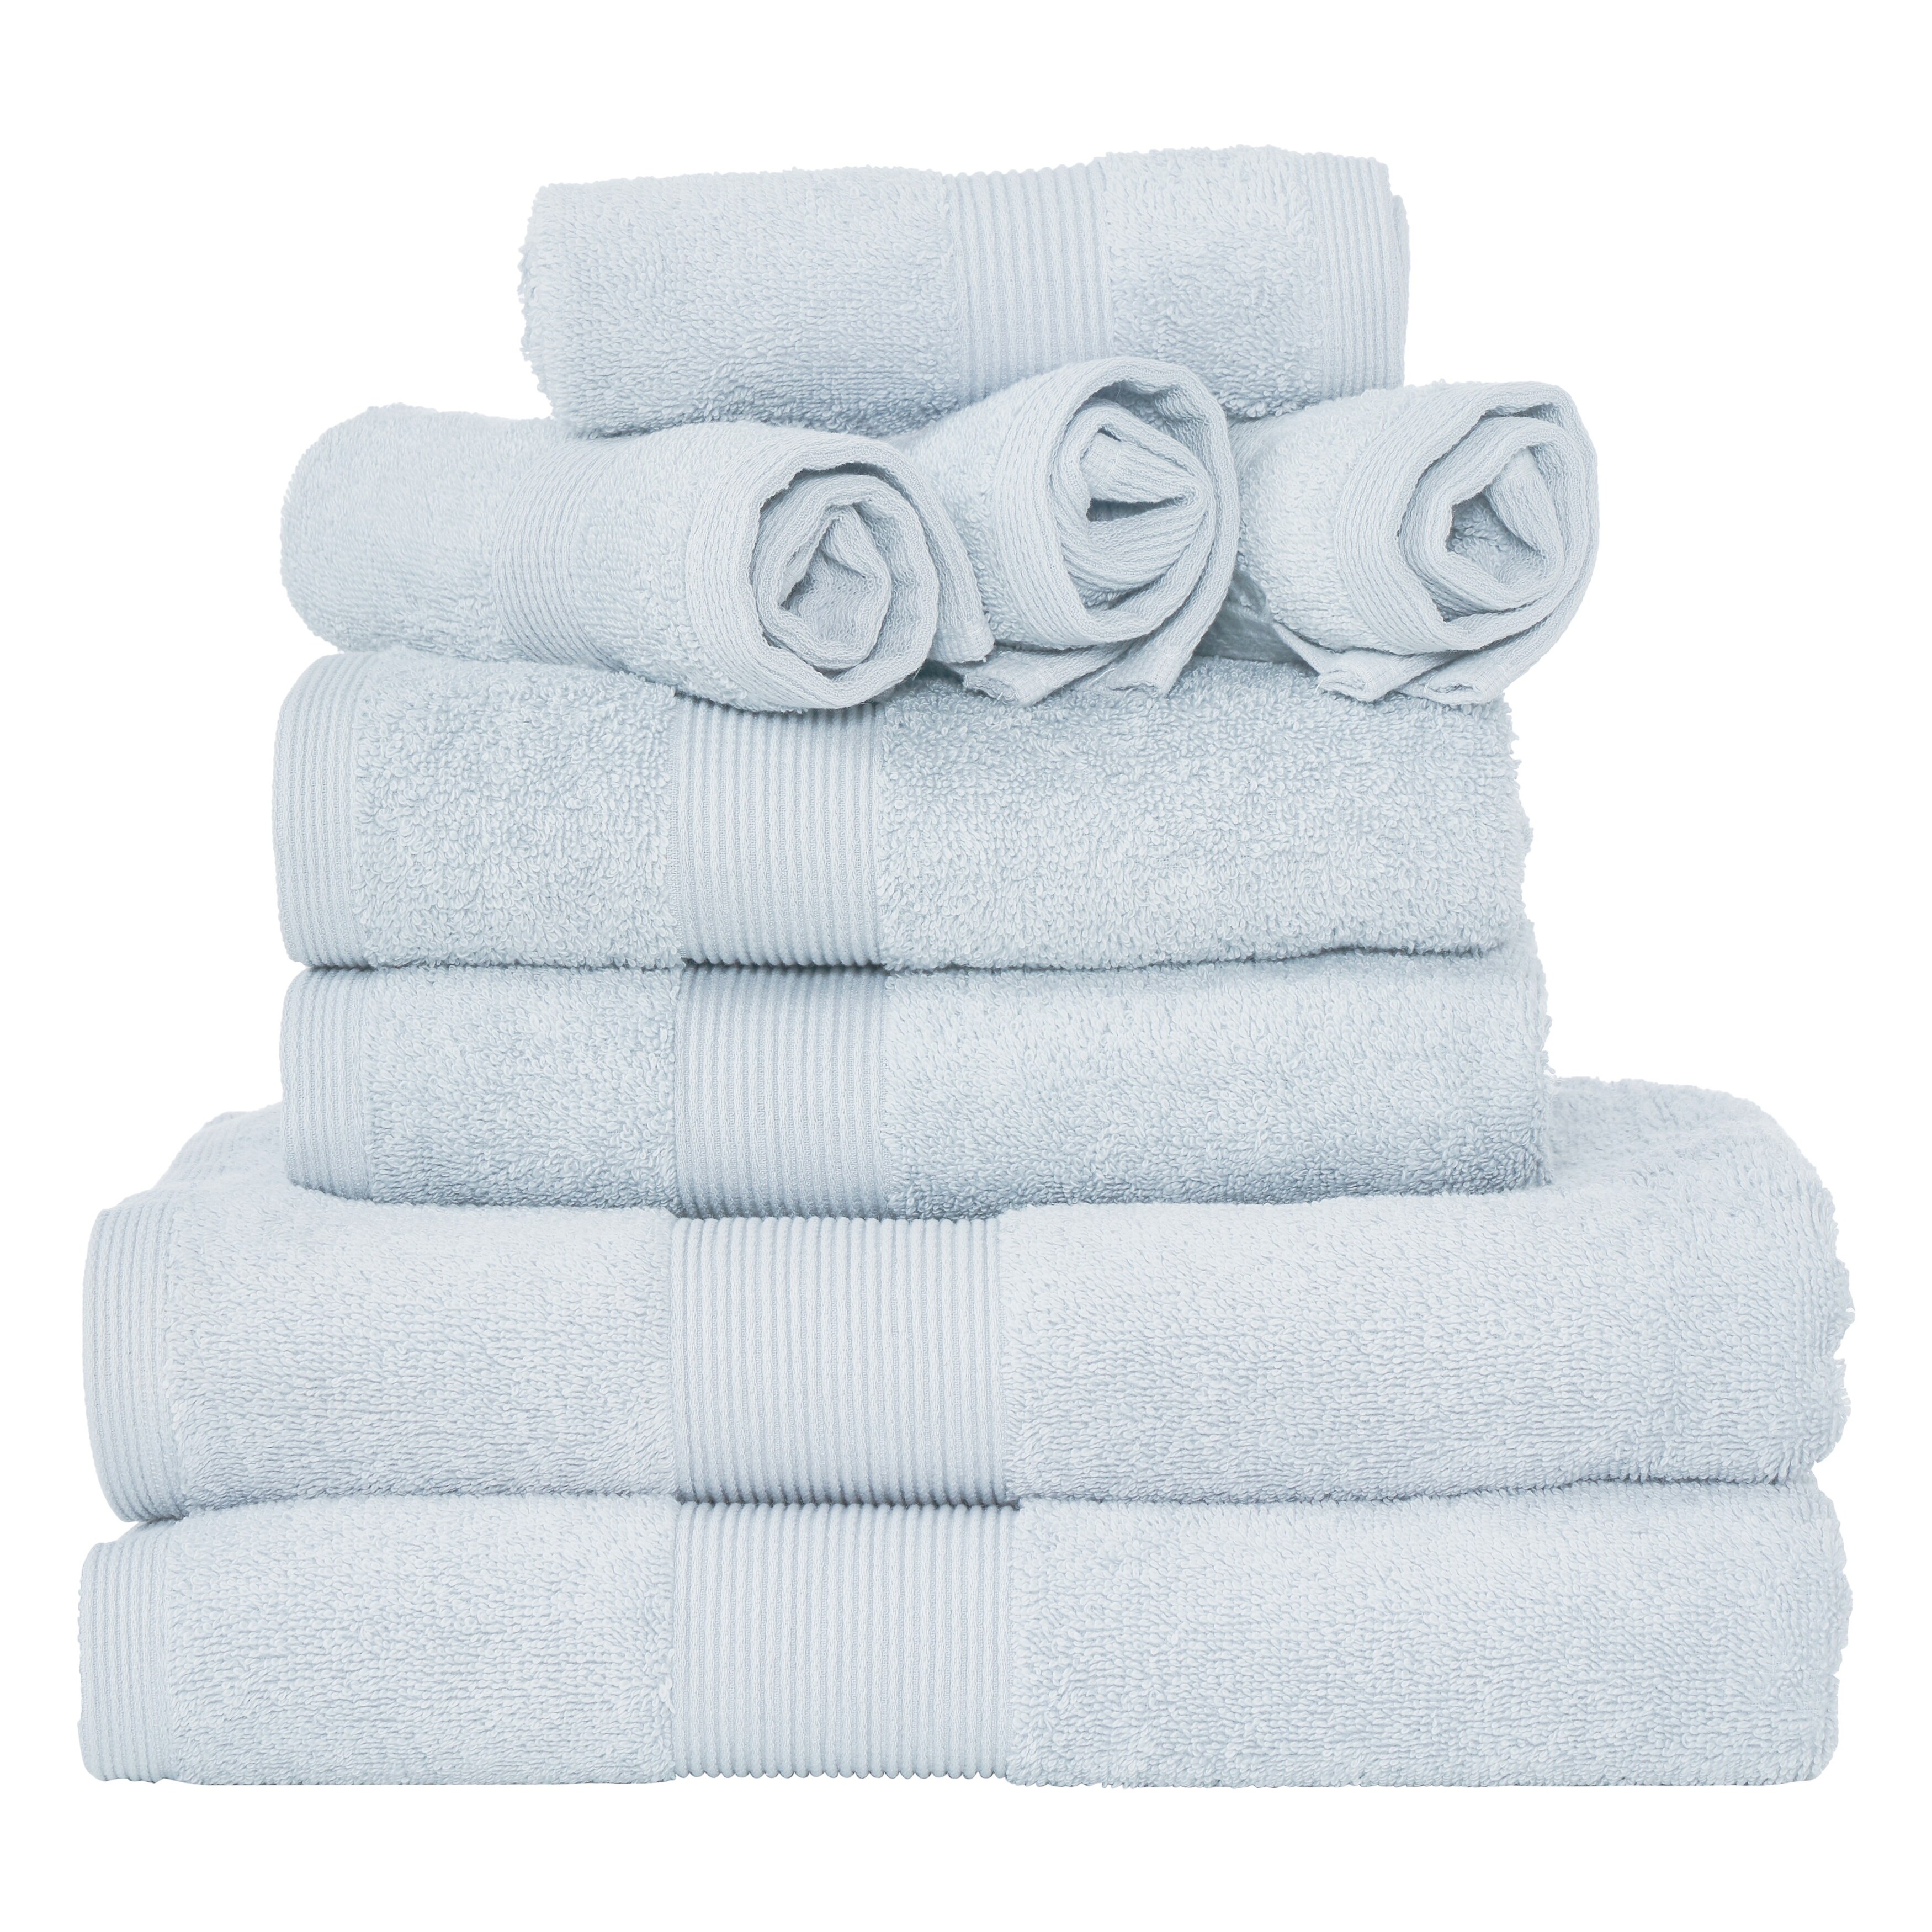 https://ak1.ostkcdn.com/images/products/is/images/direct/7c639e68b9e591e32abb51a7929b96aebec0ae3d/Fabstyles-Premium-Quality-8-Piece-600-GSM-Zero-Twist-Cotton-Towel-Set.jpg